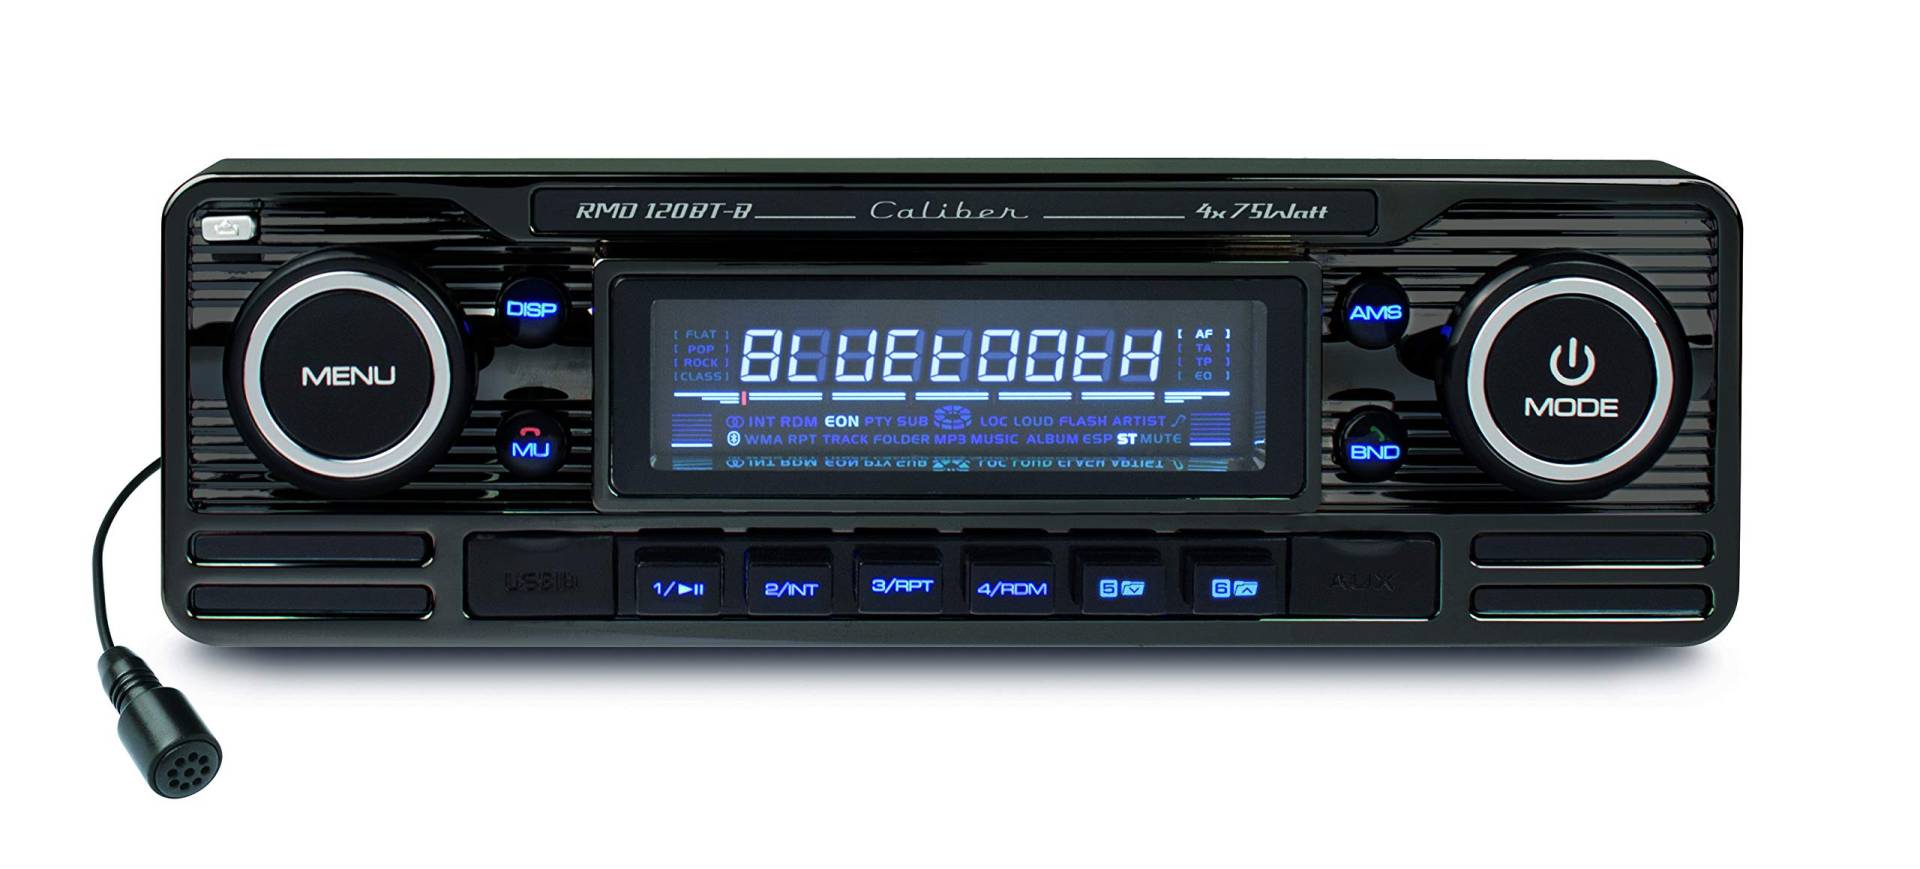 Caliber Retro Autoradio - Auto Radio Bluetooth USB - FM - 1 DIN Radio Auto - Autoradio mit Bluetooth Freisprecheinrichtung - Schwarz von Caliber